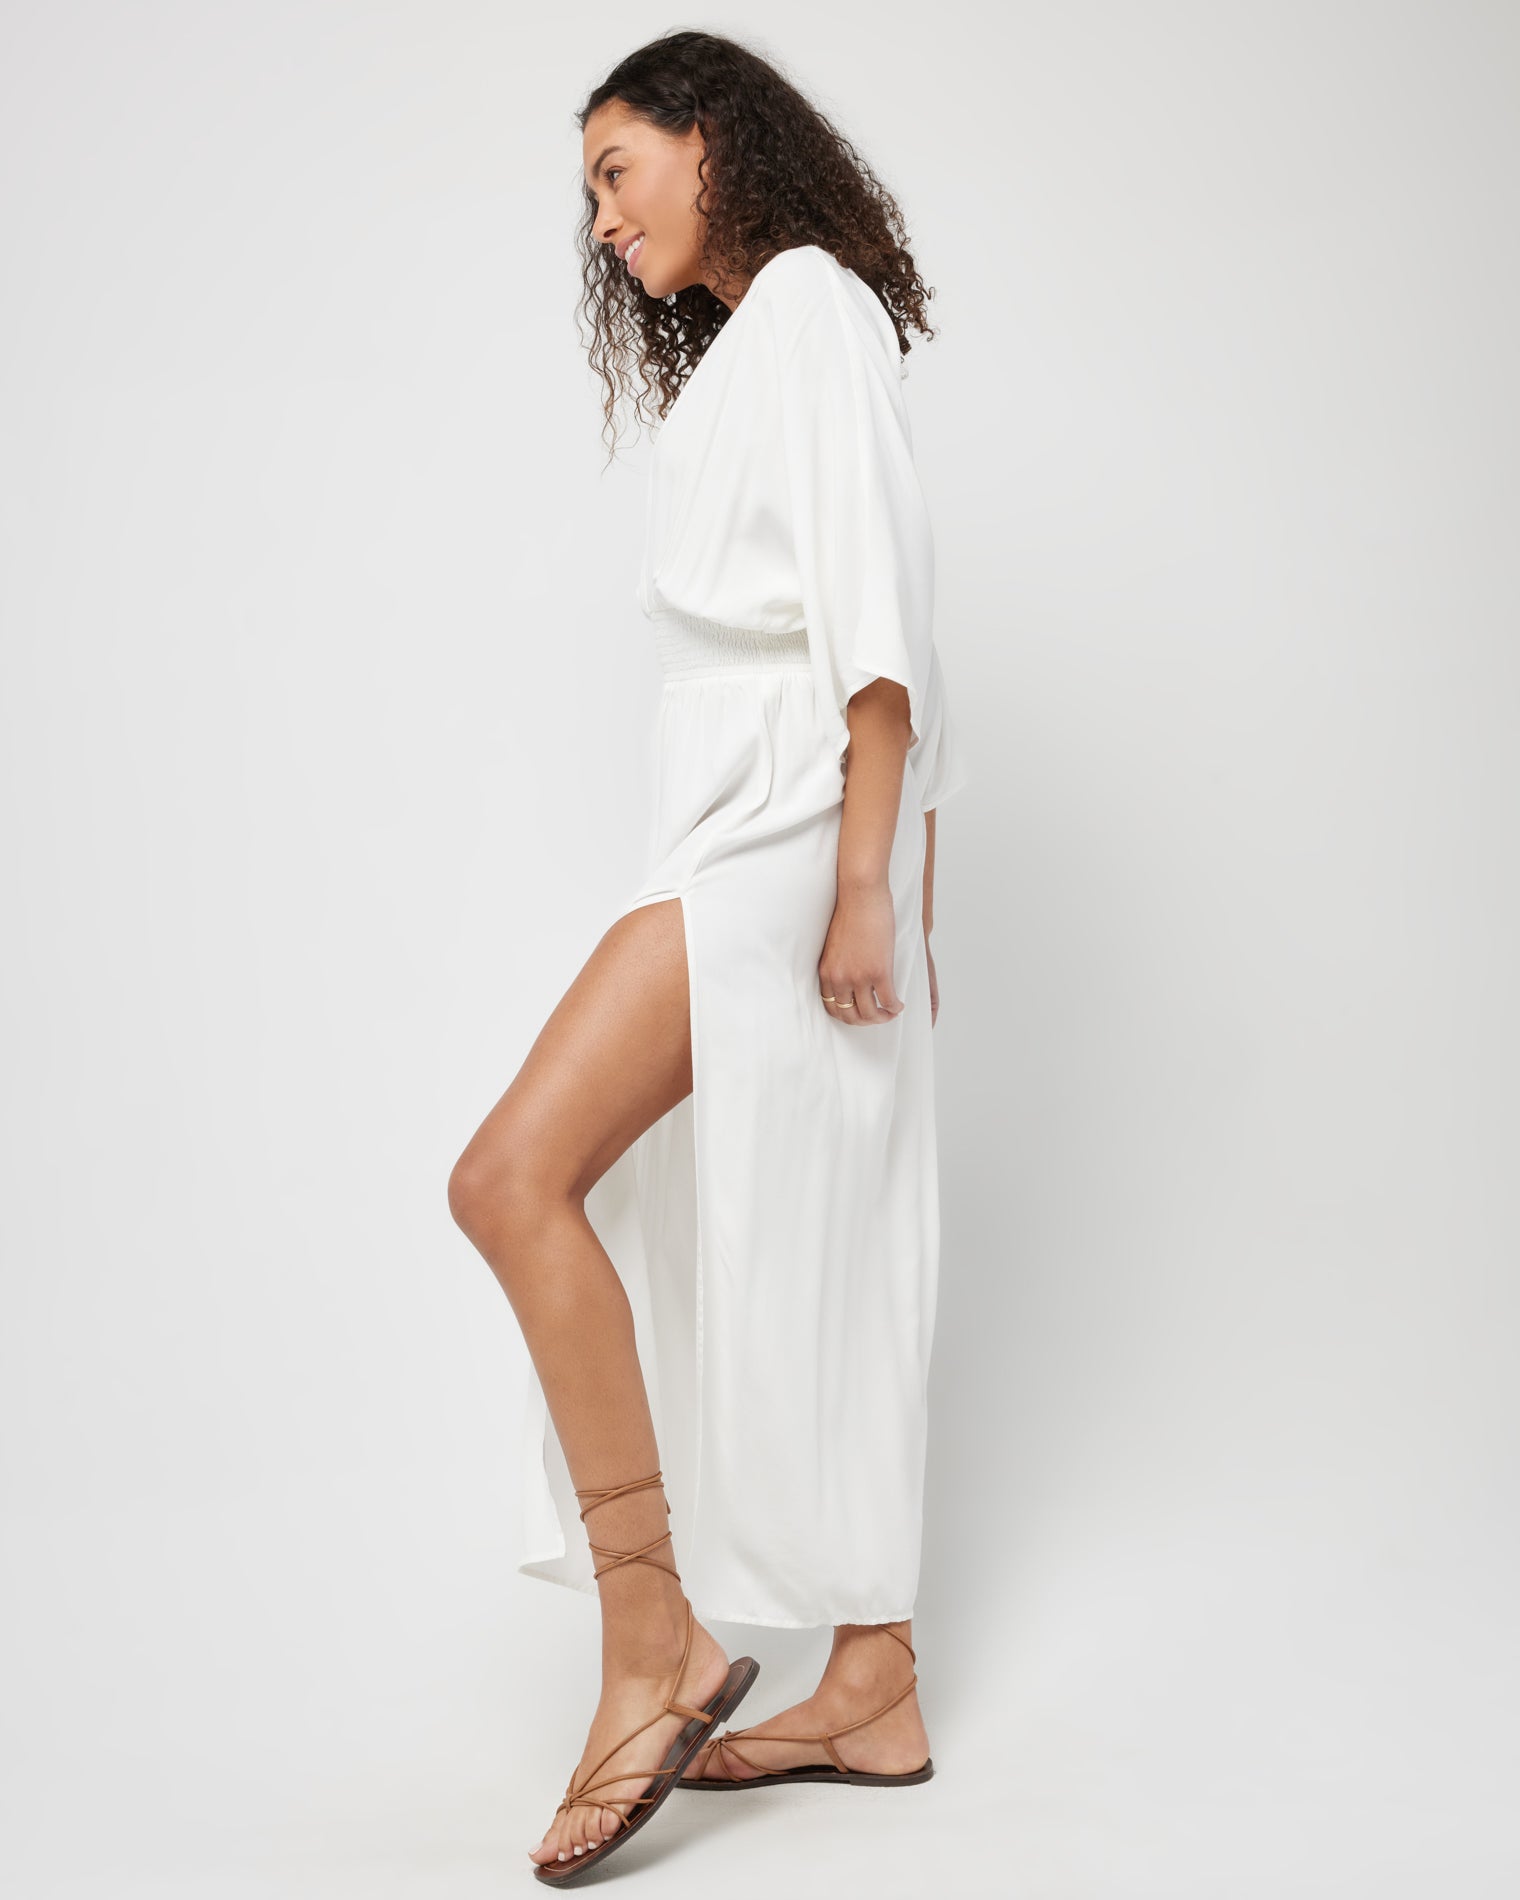 Sungazer Dress Cream | Model: Blaine (size: S)